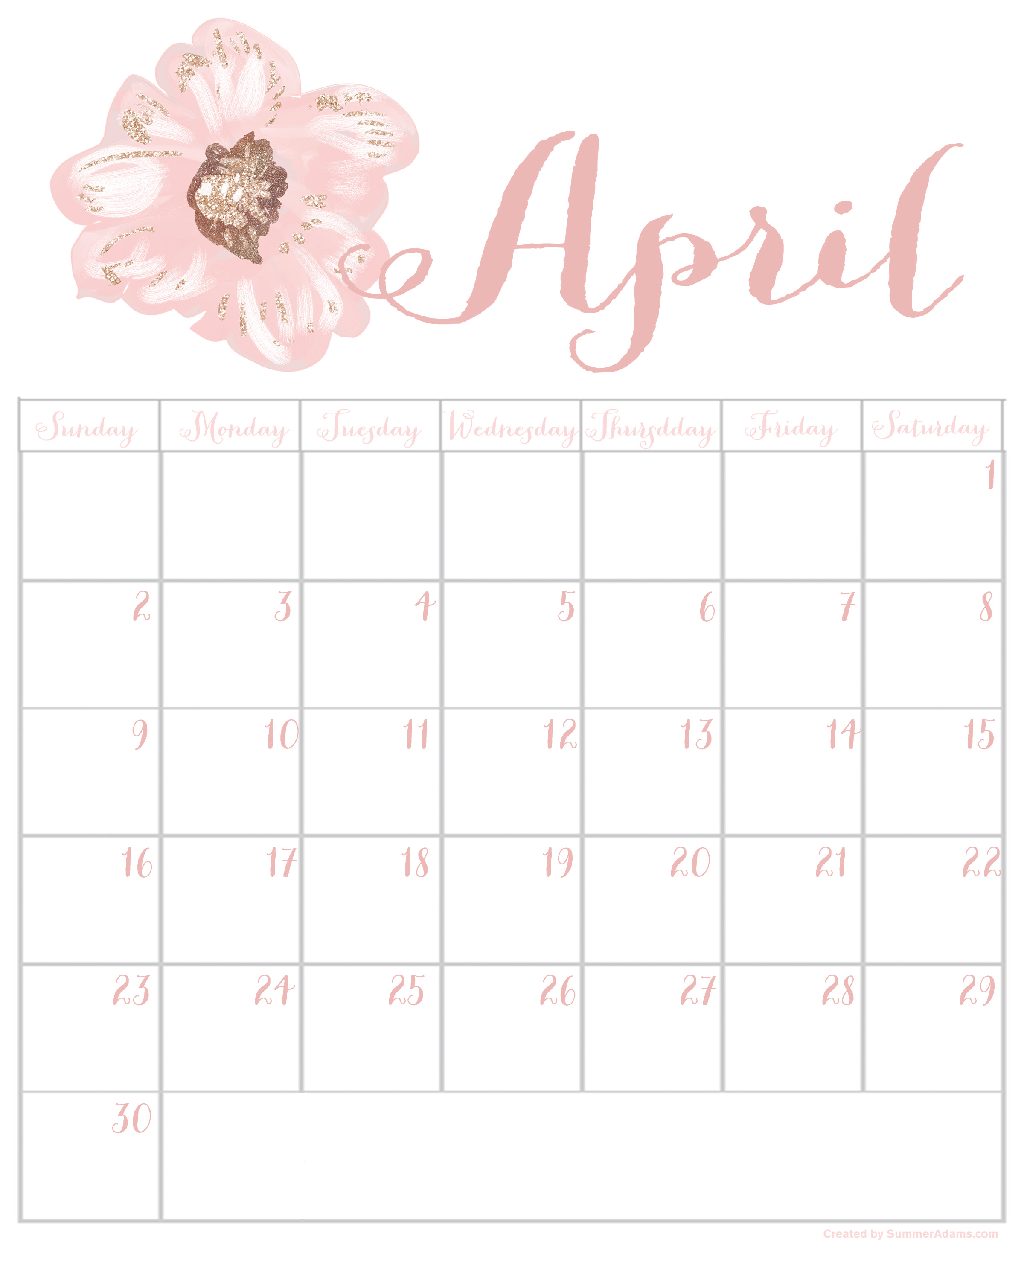 Free April 2017 Printable Calendar PinkBlush Summer Adams